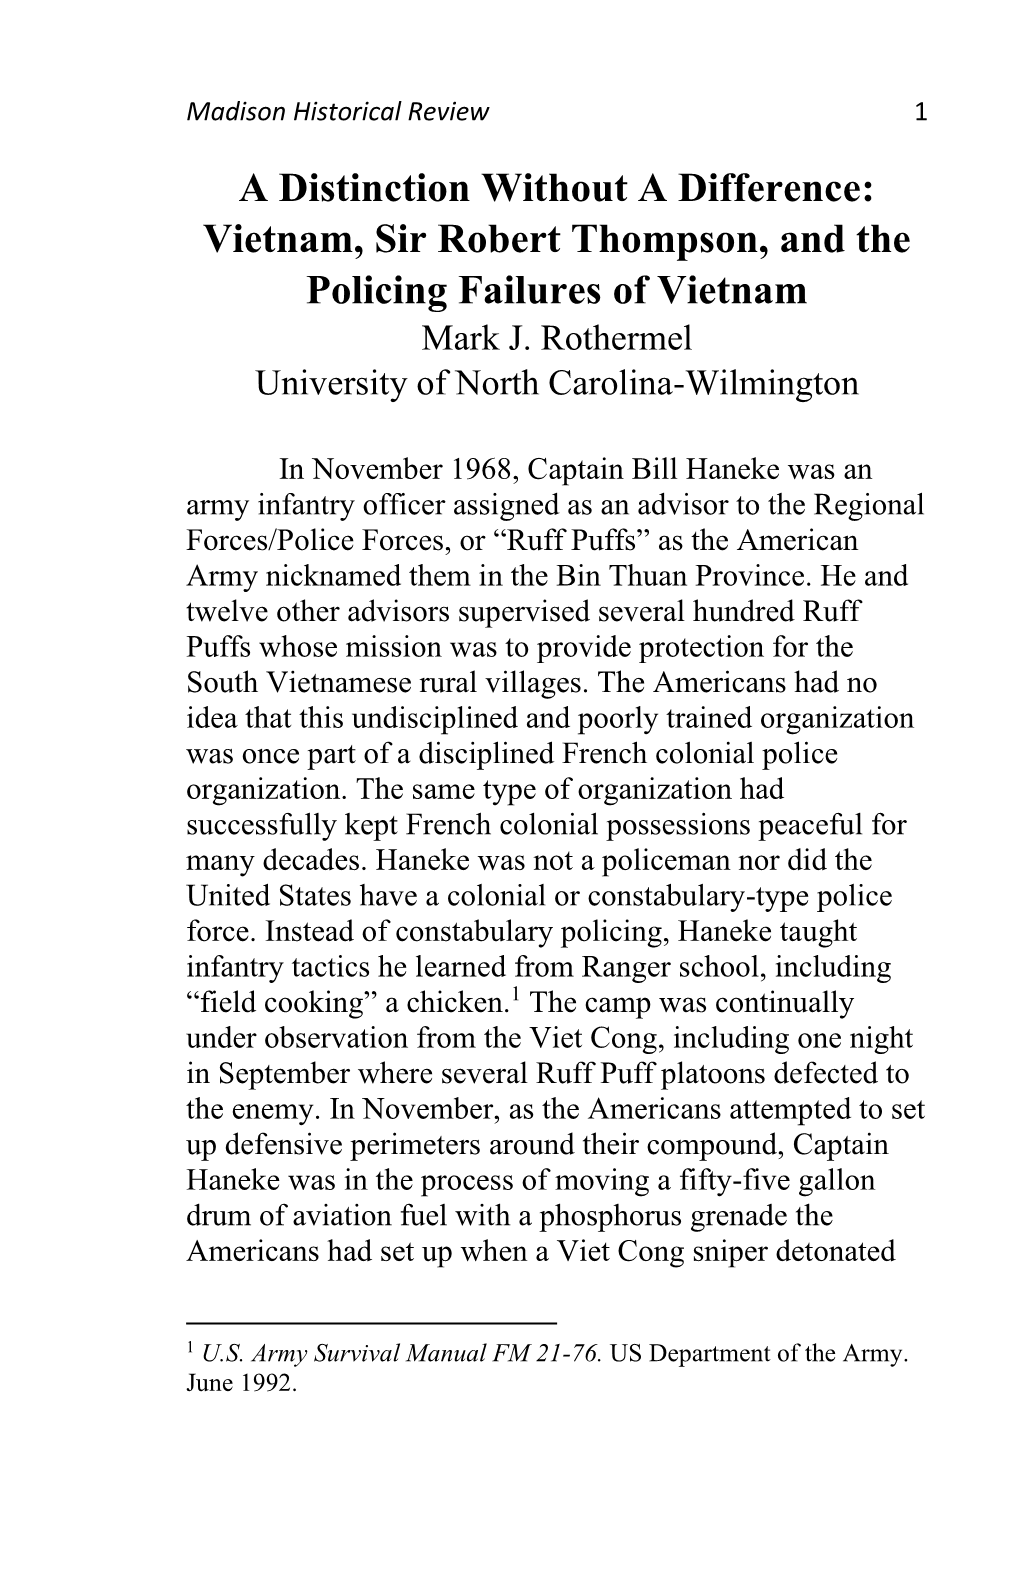 Vietnam, Sir Robert Thompson, and the Policing Failures of Vietnam Mark J